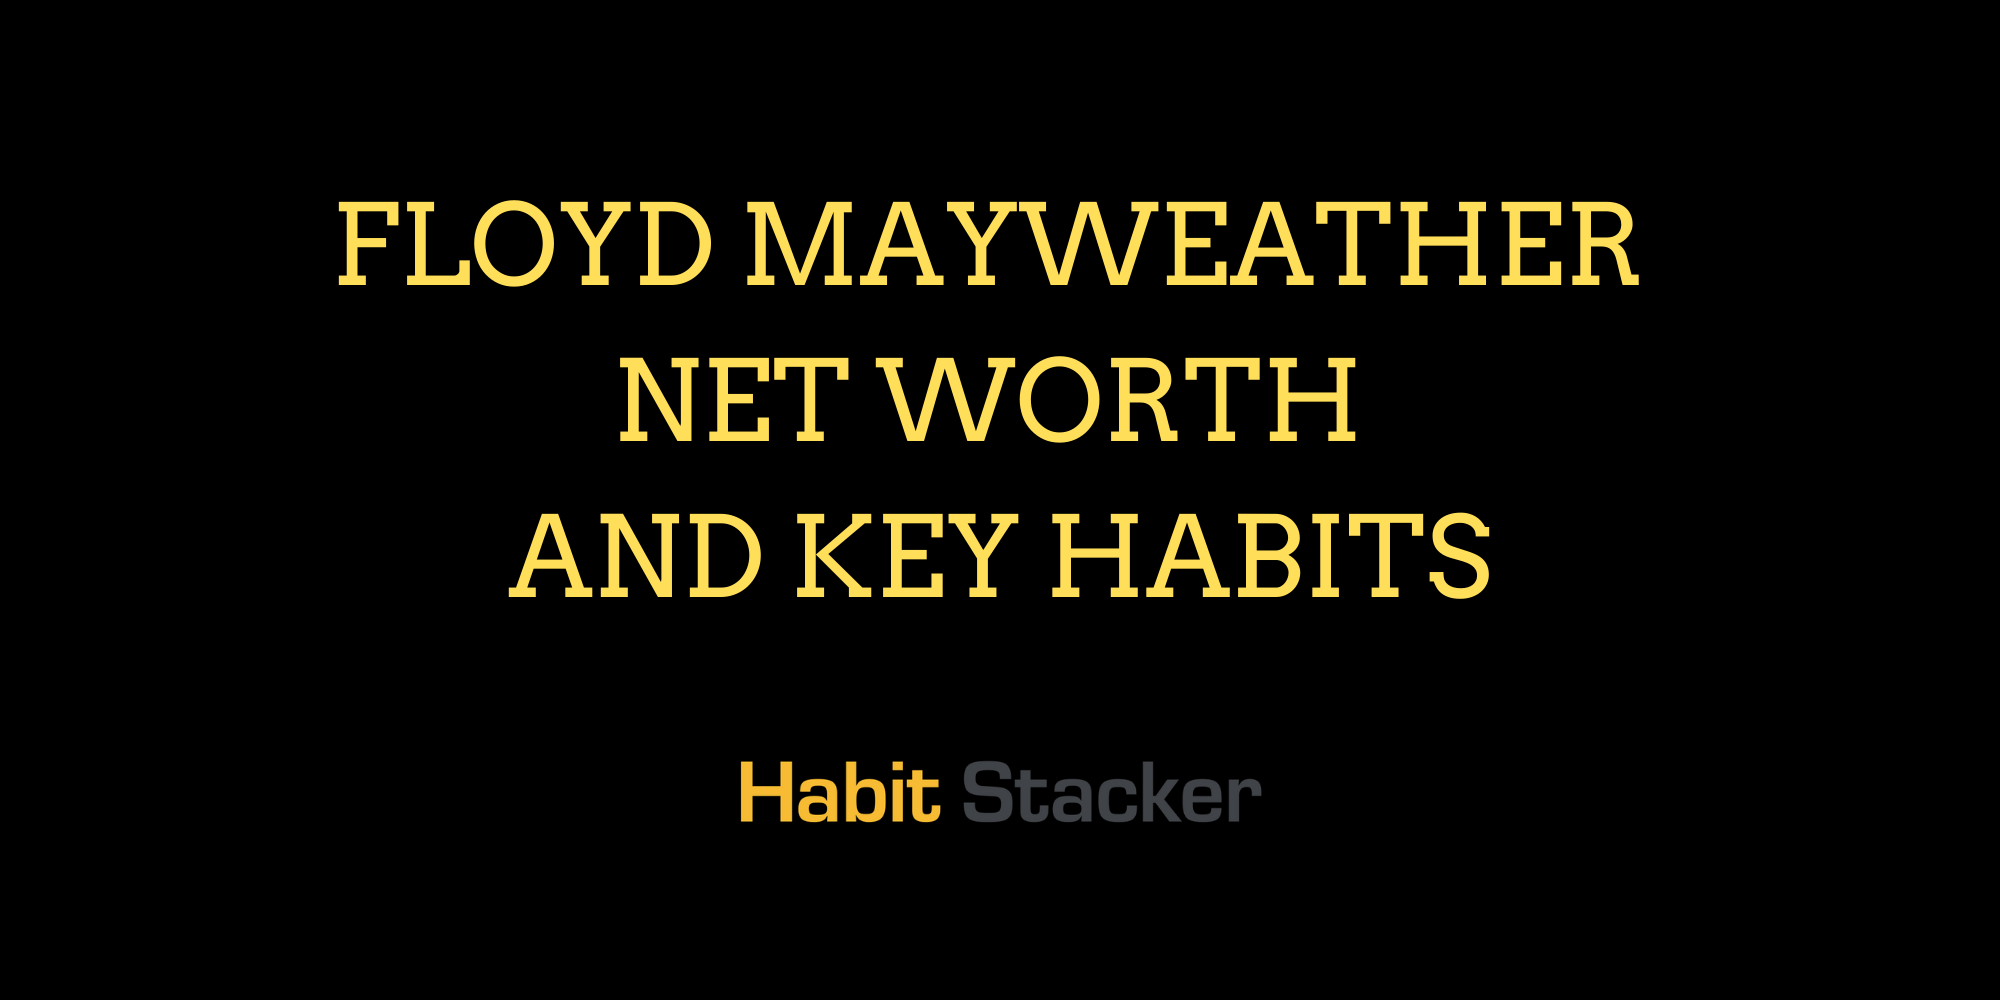 Floyd Mayweather Net Worth and Key Habits